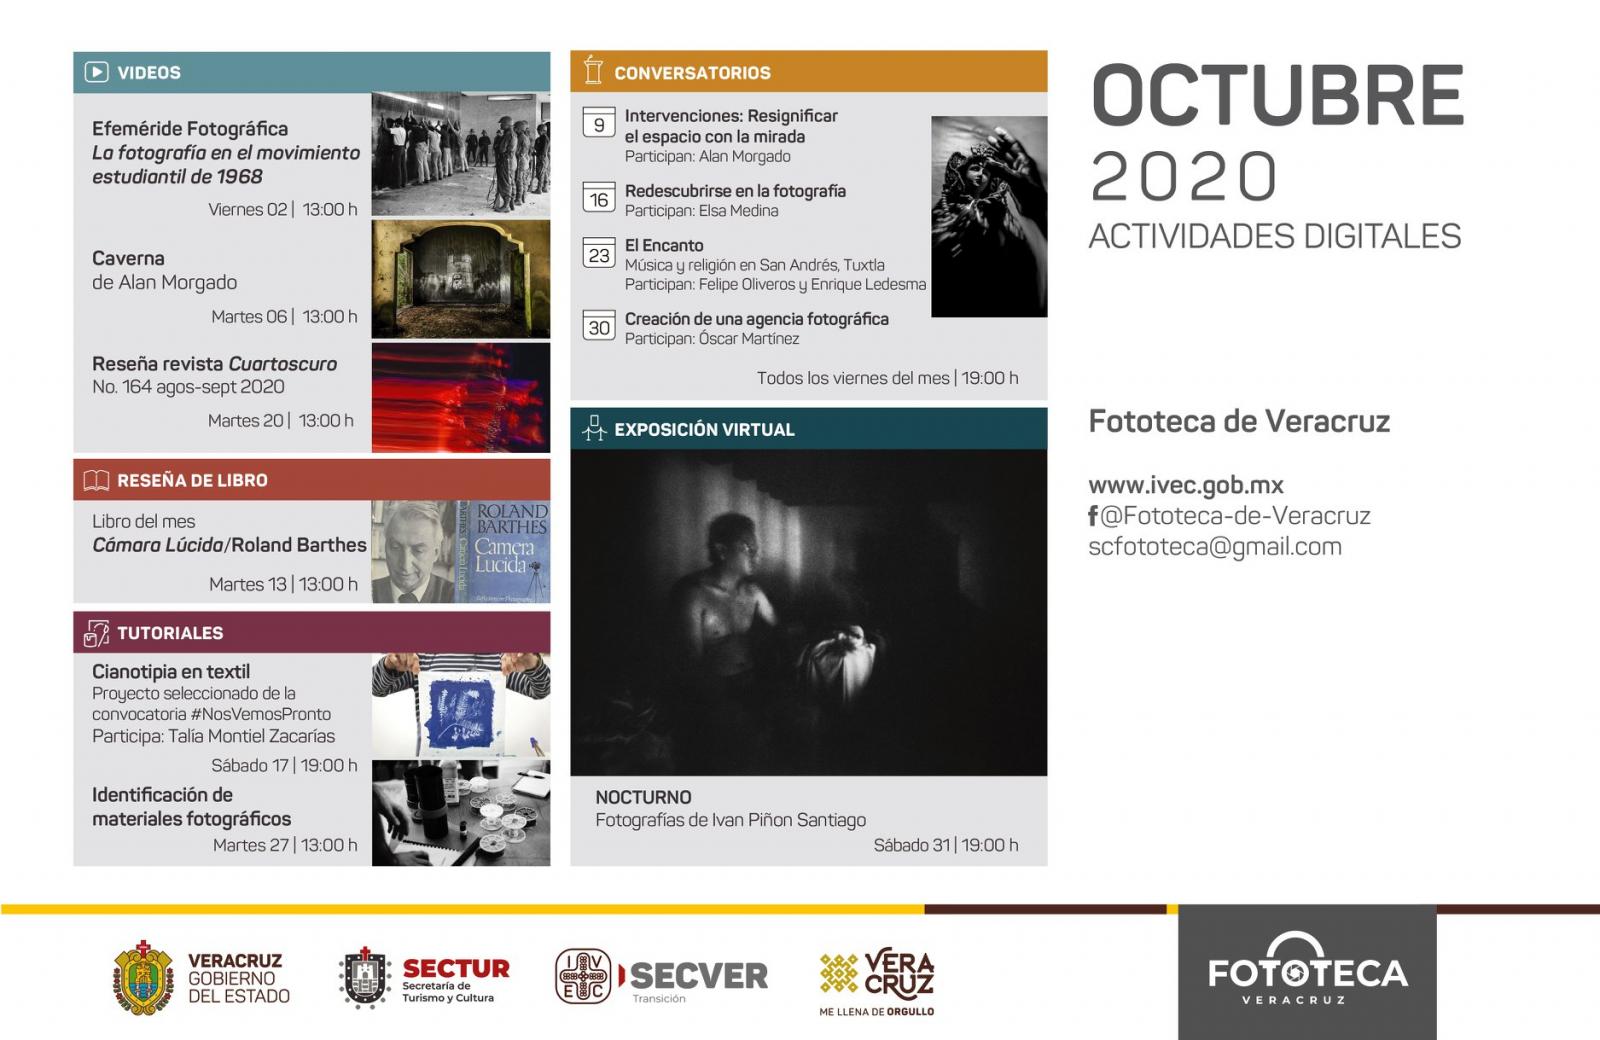 Thumbnail of Conversatorio con Fototeca Veracruz